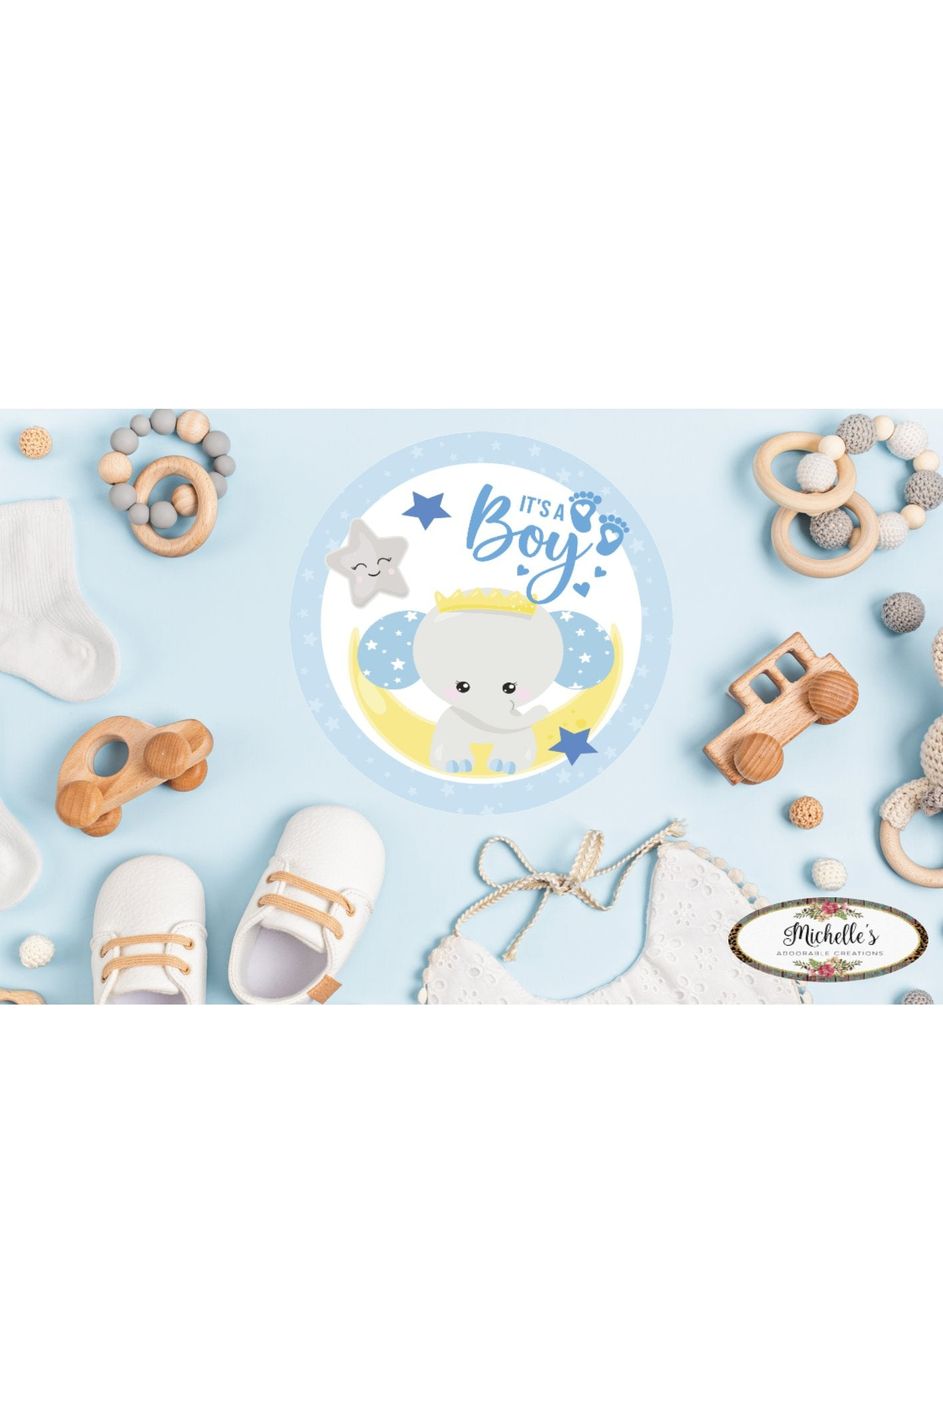 Shop For Its a Boy Baby Elephant Sign - Wreath Enhancement